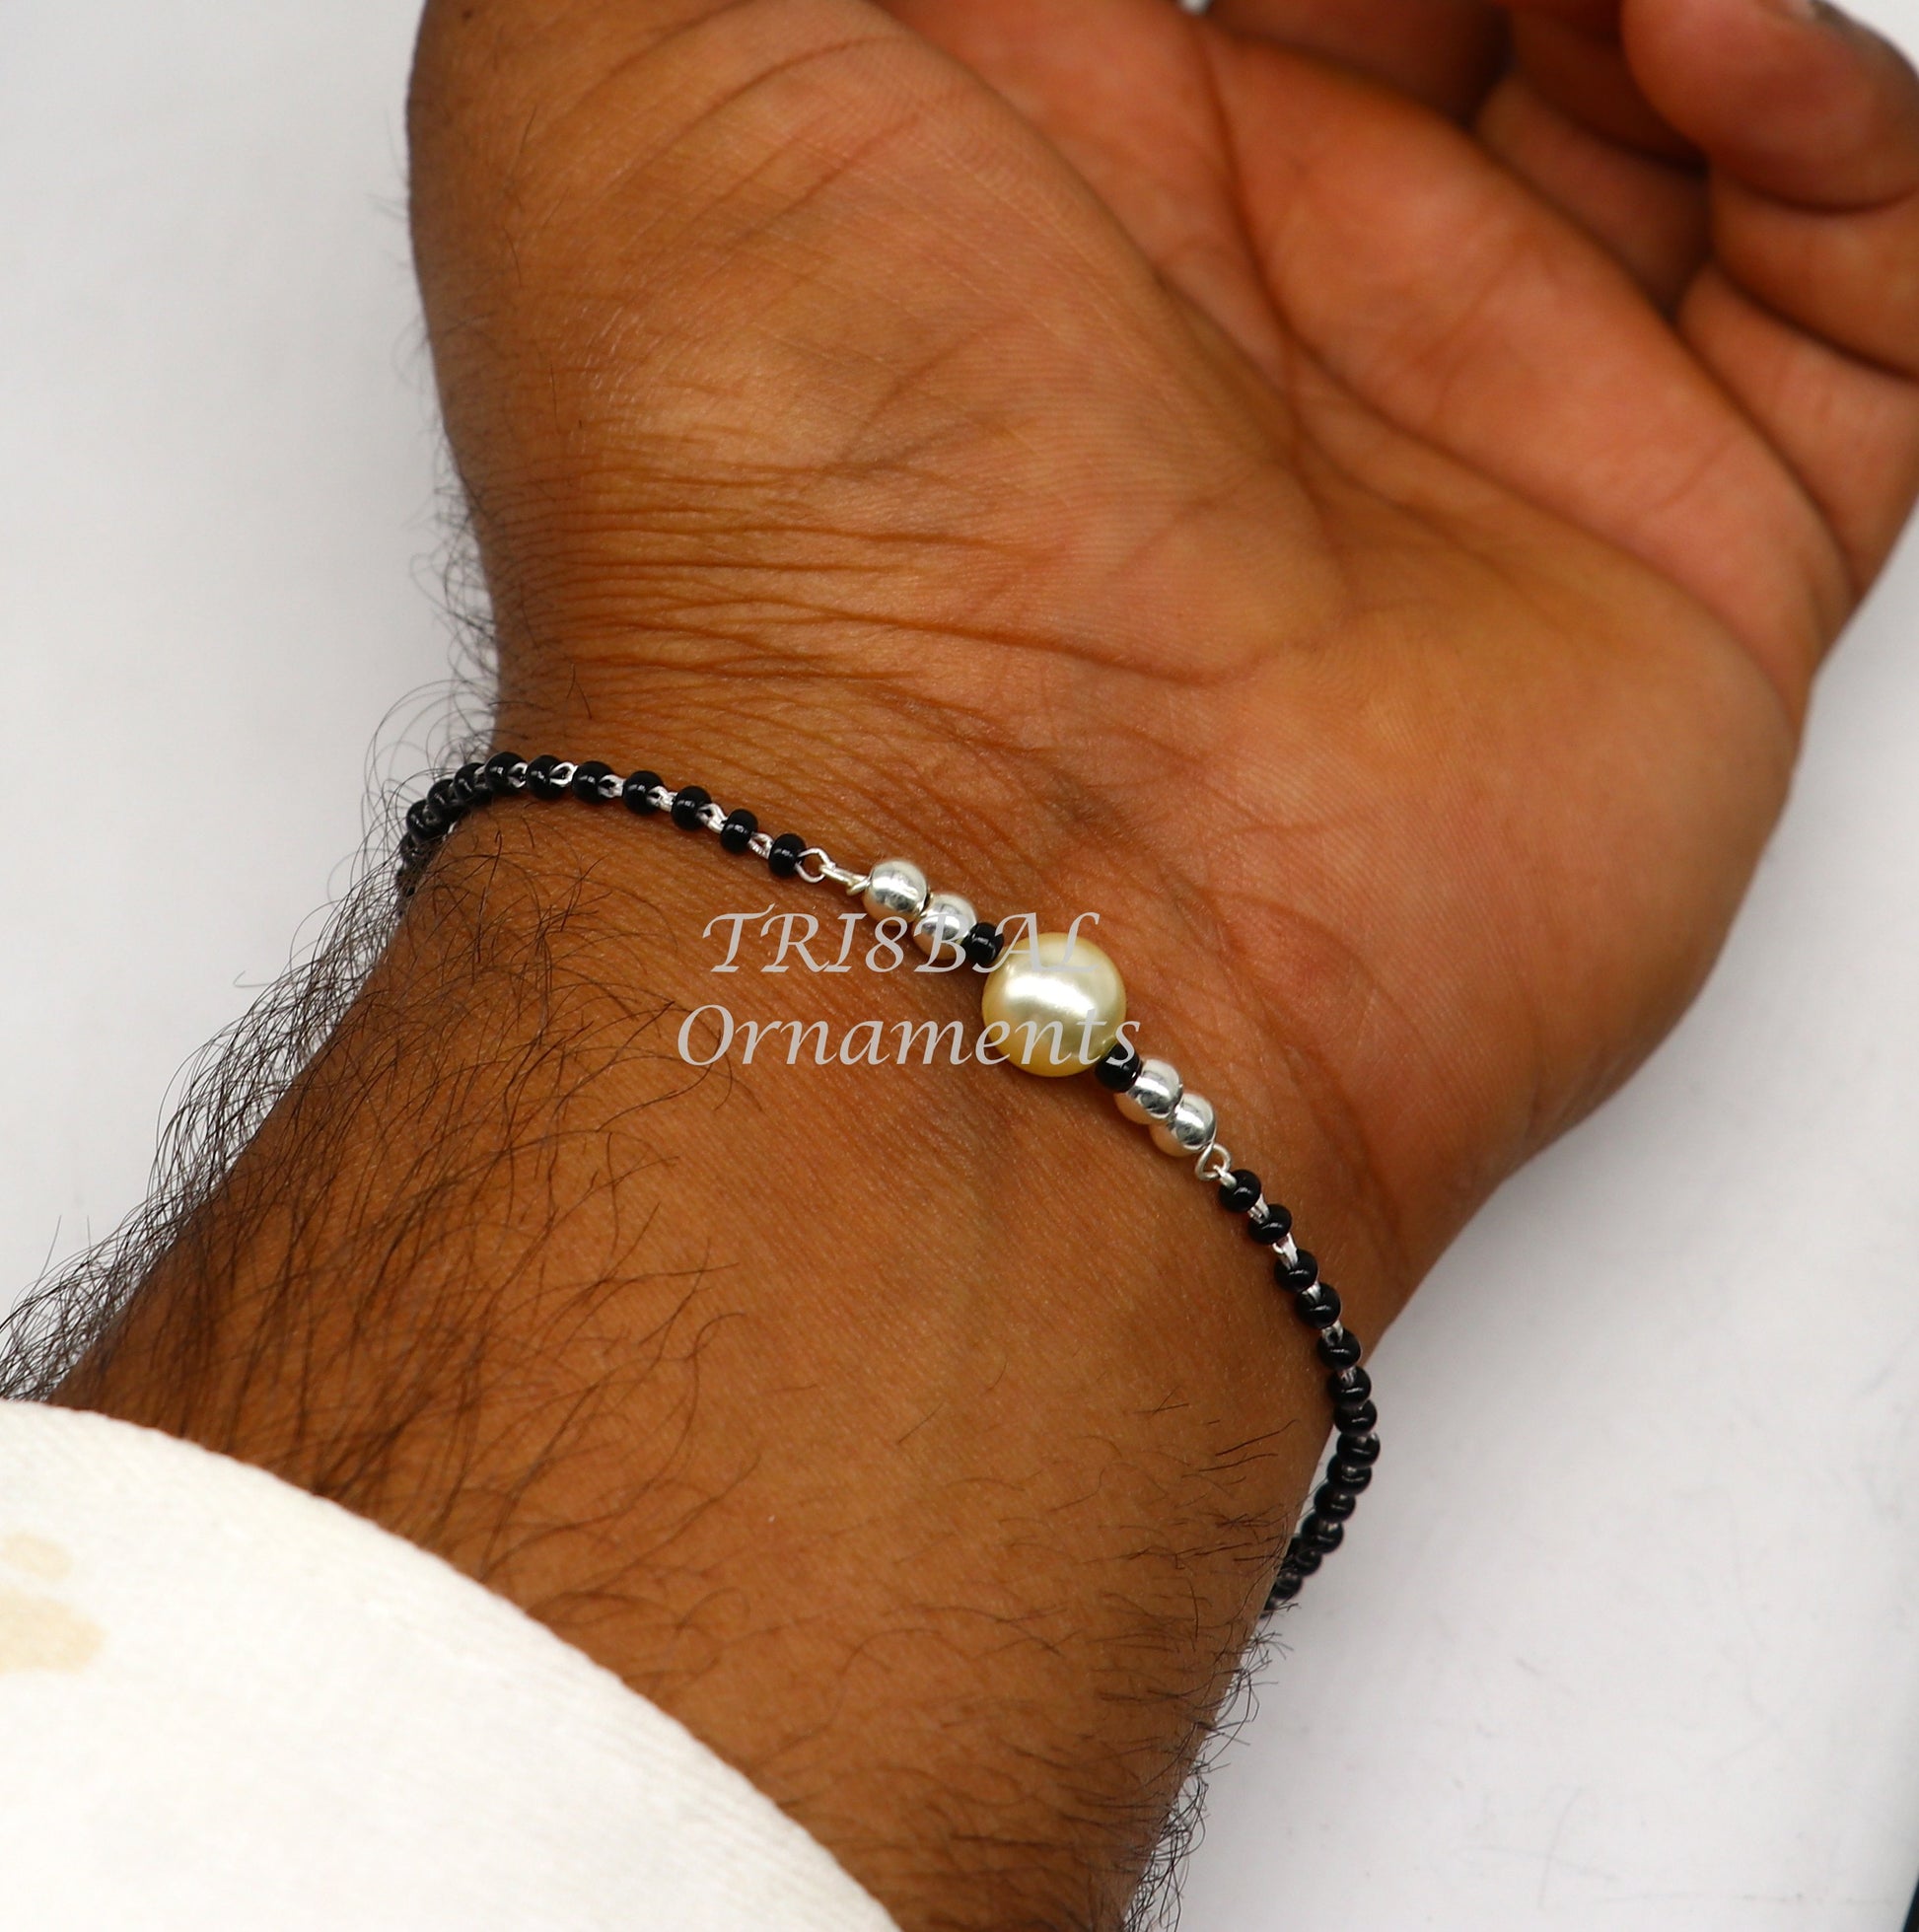 All sizes 925 sterling silver customized black beads Nazariya bracelet use as an anklets Best girl's bracelet stylish jewelry india sbr457 - TRIBAL ORNAMENTS